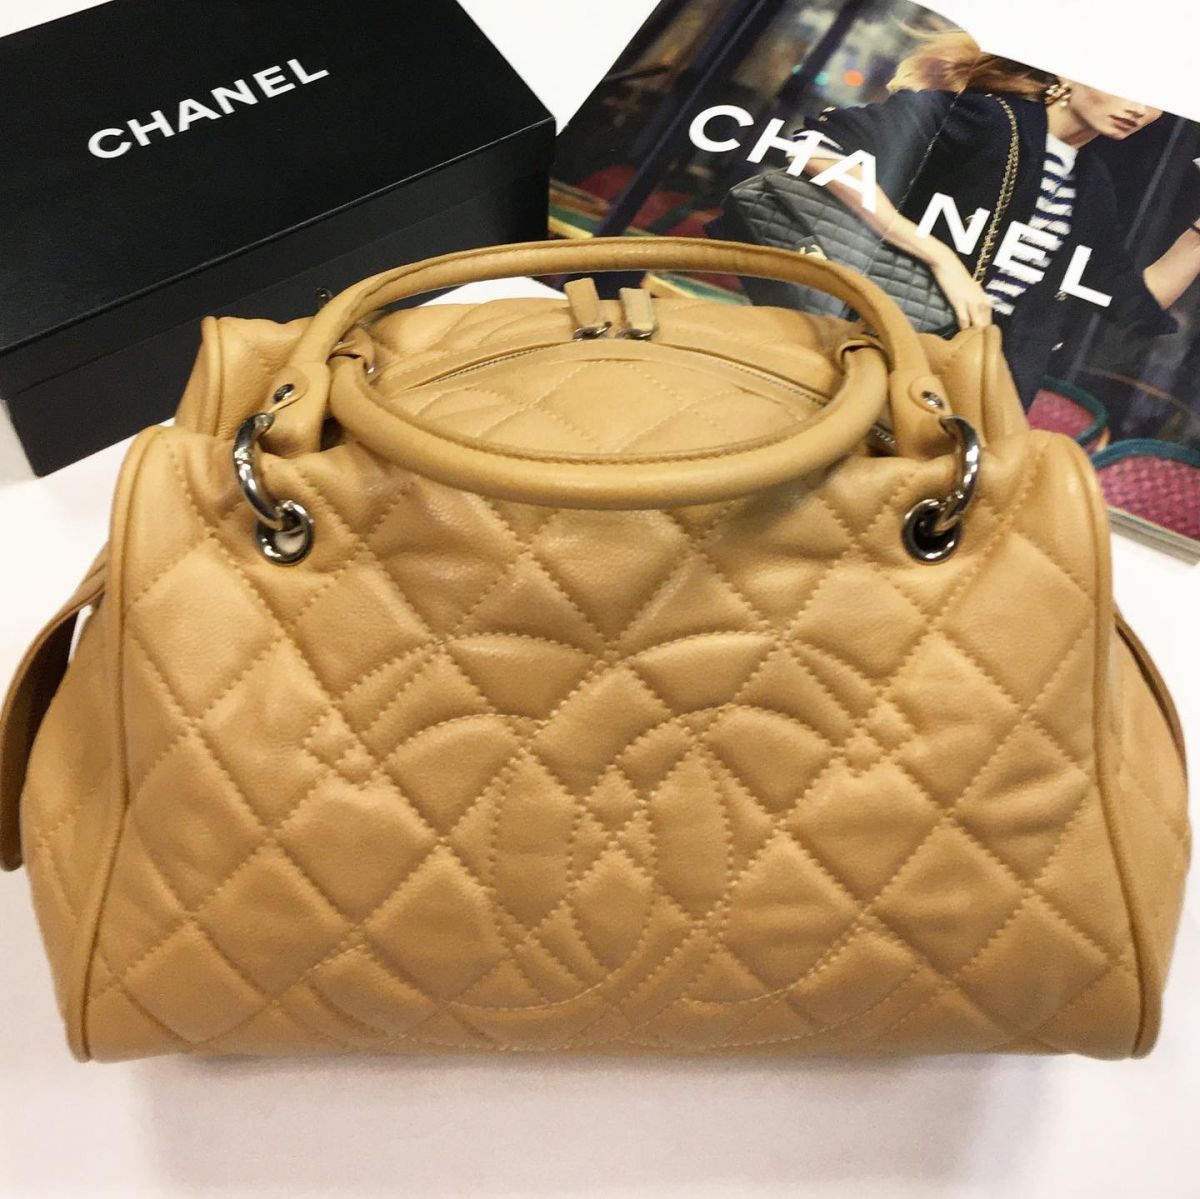 Сумка Chanel  размер 33/23 цена 92 310 руб 